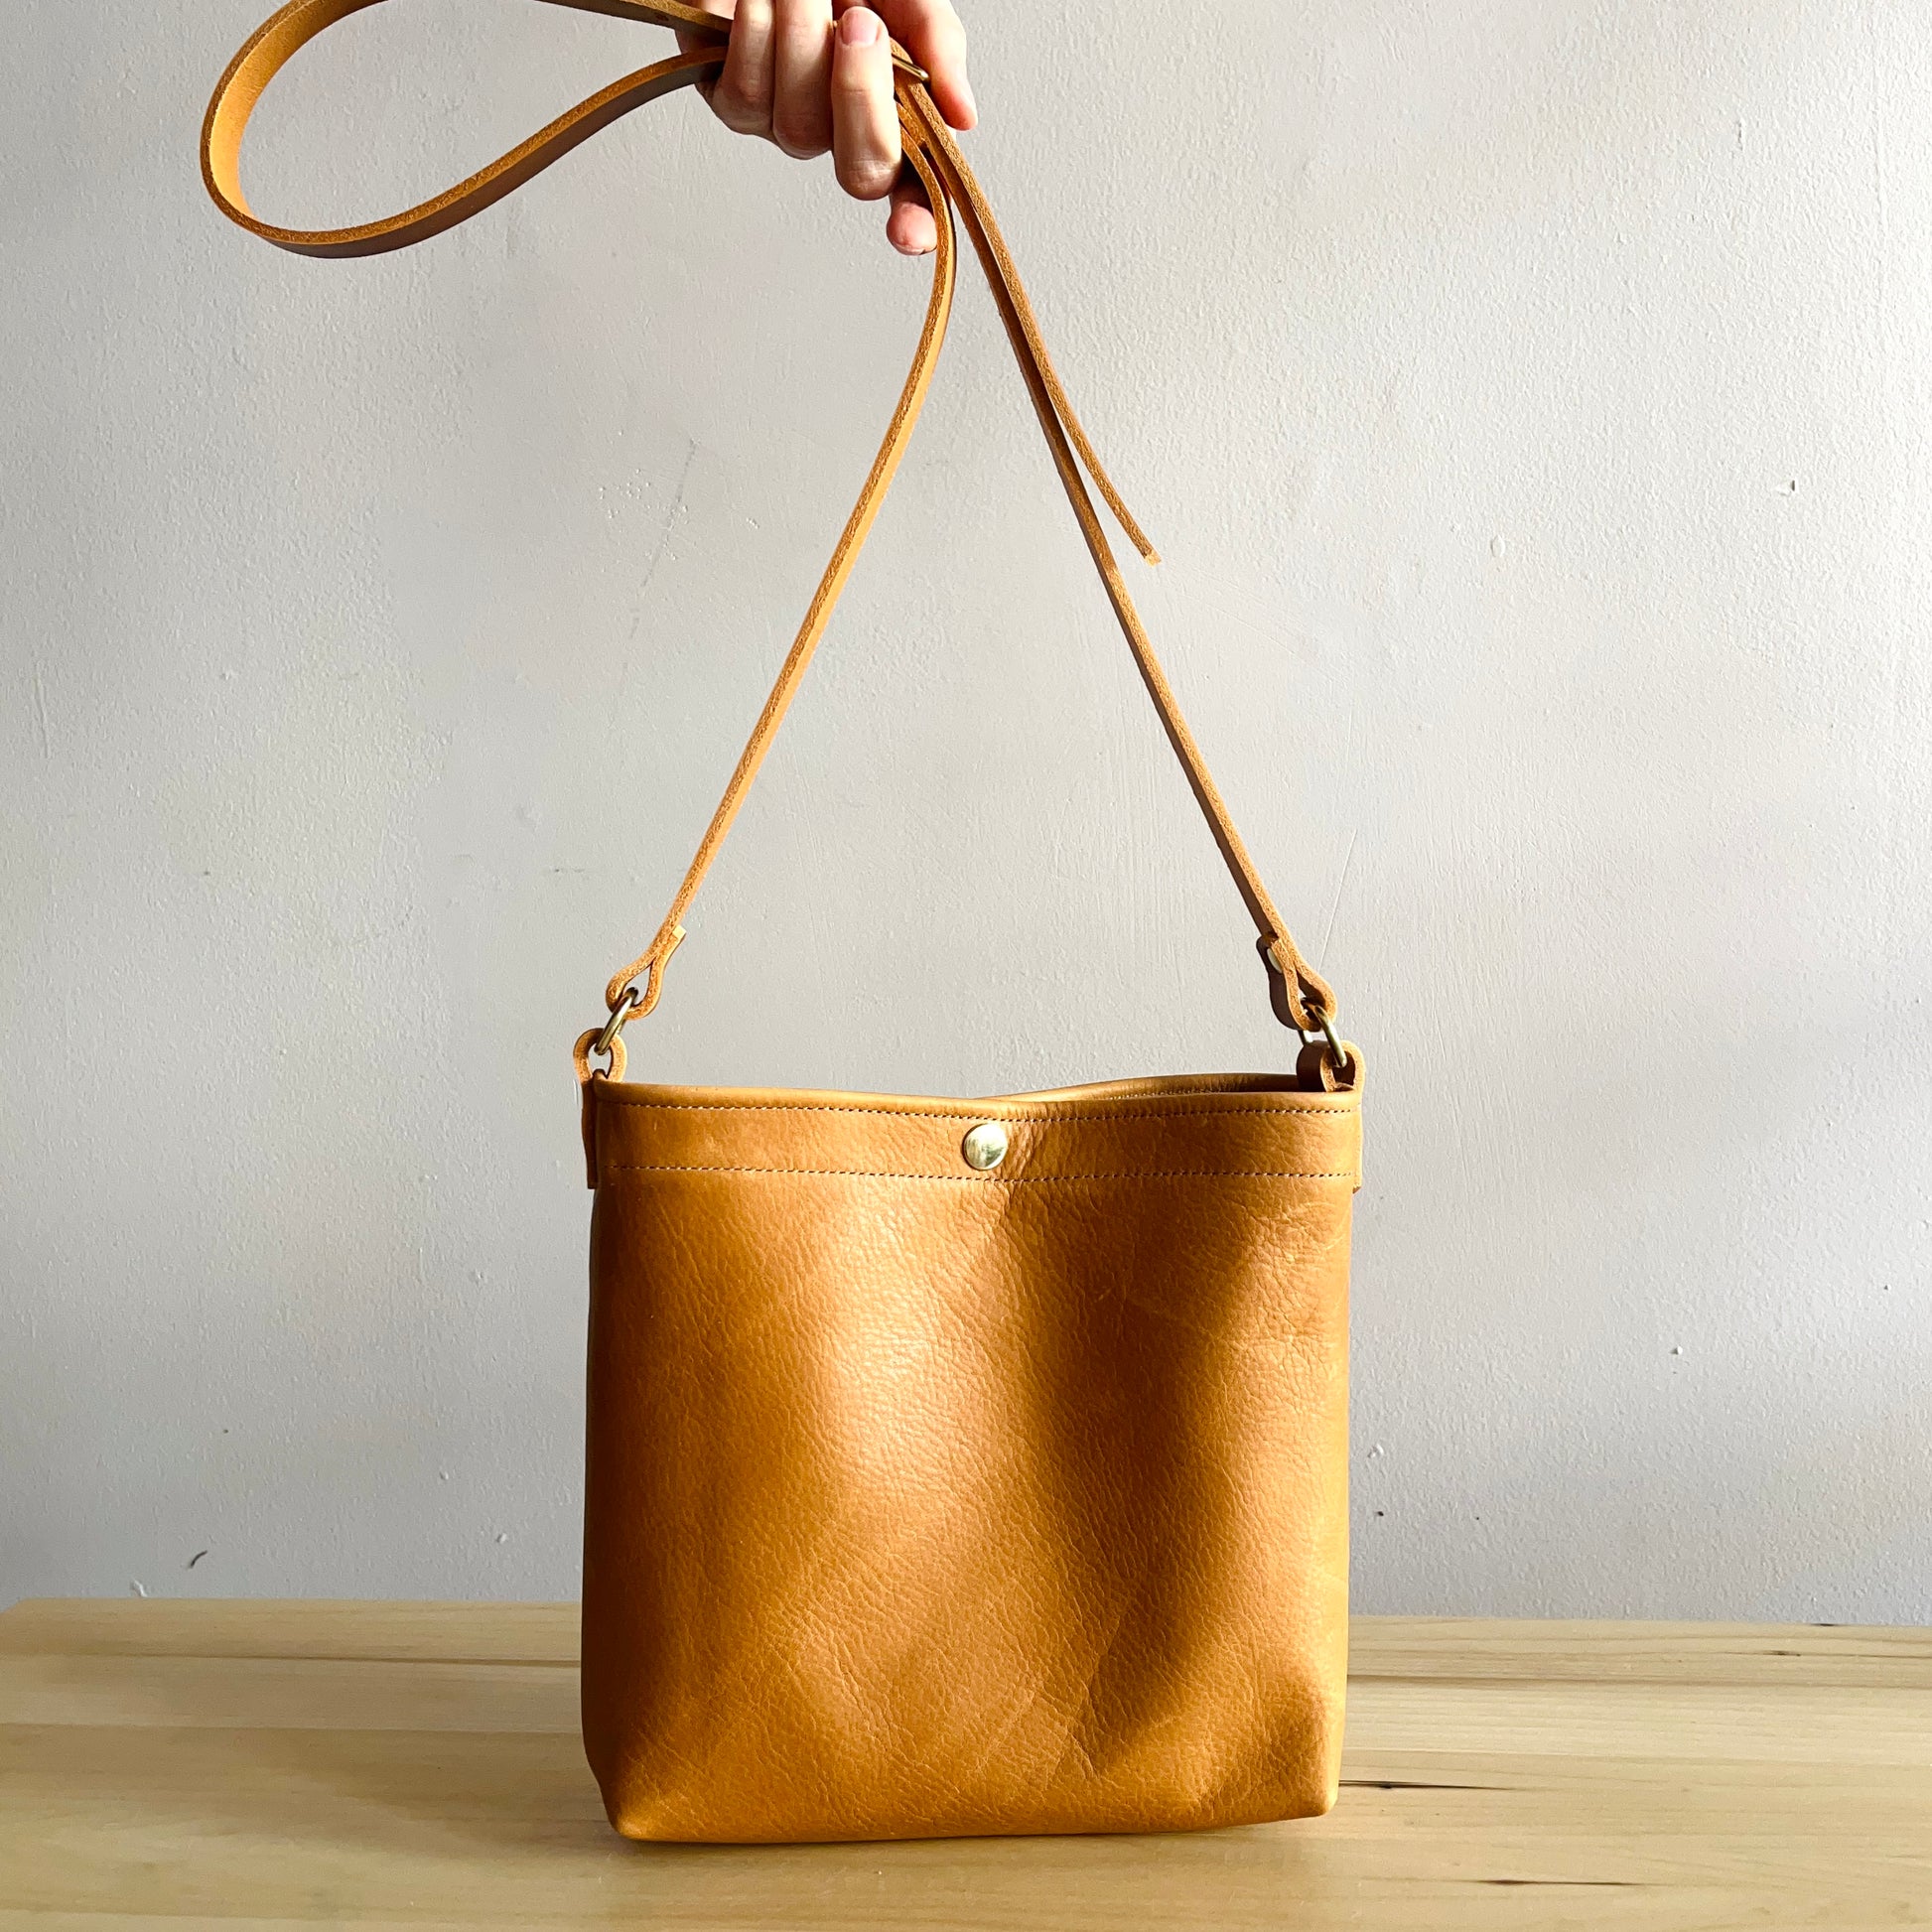 Tan leather crossbody bag